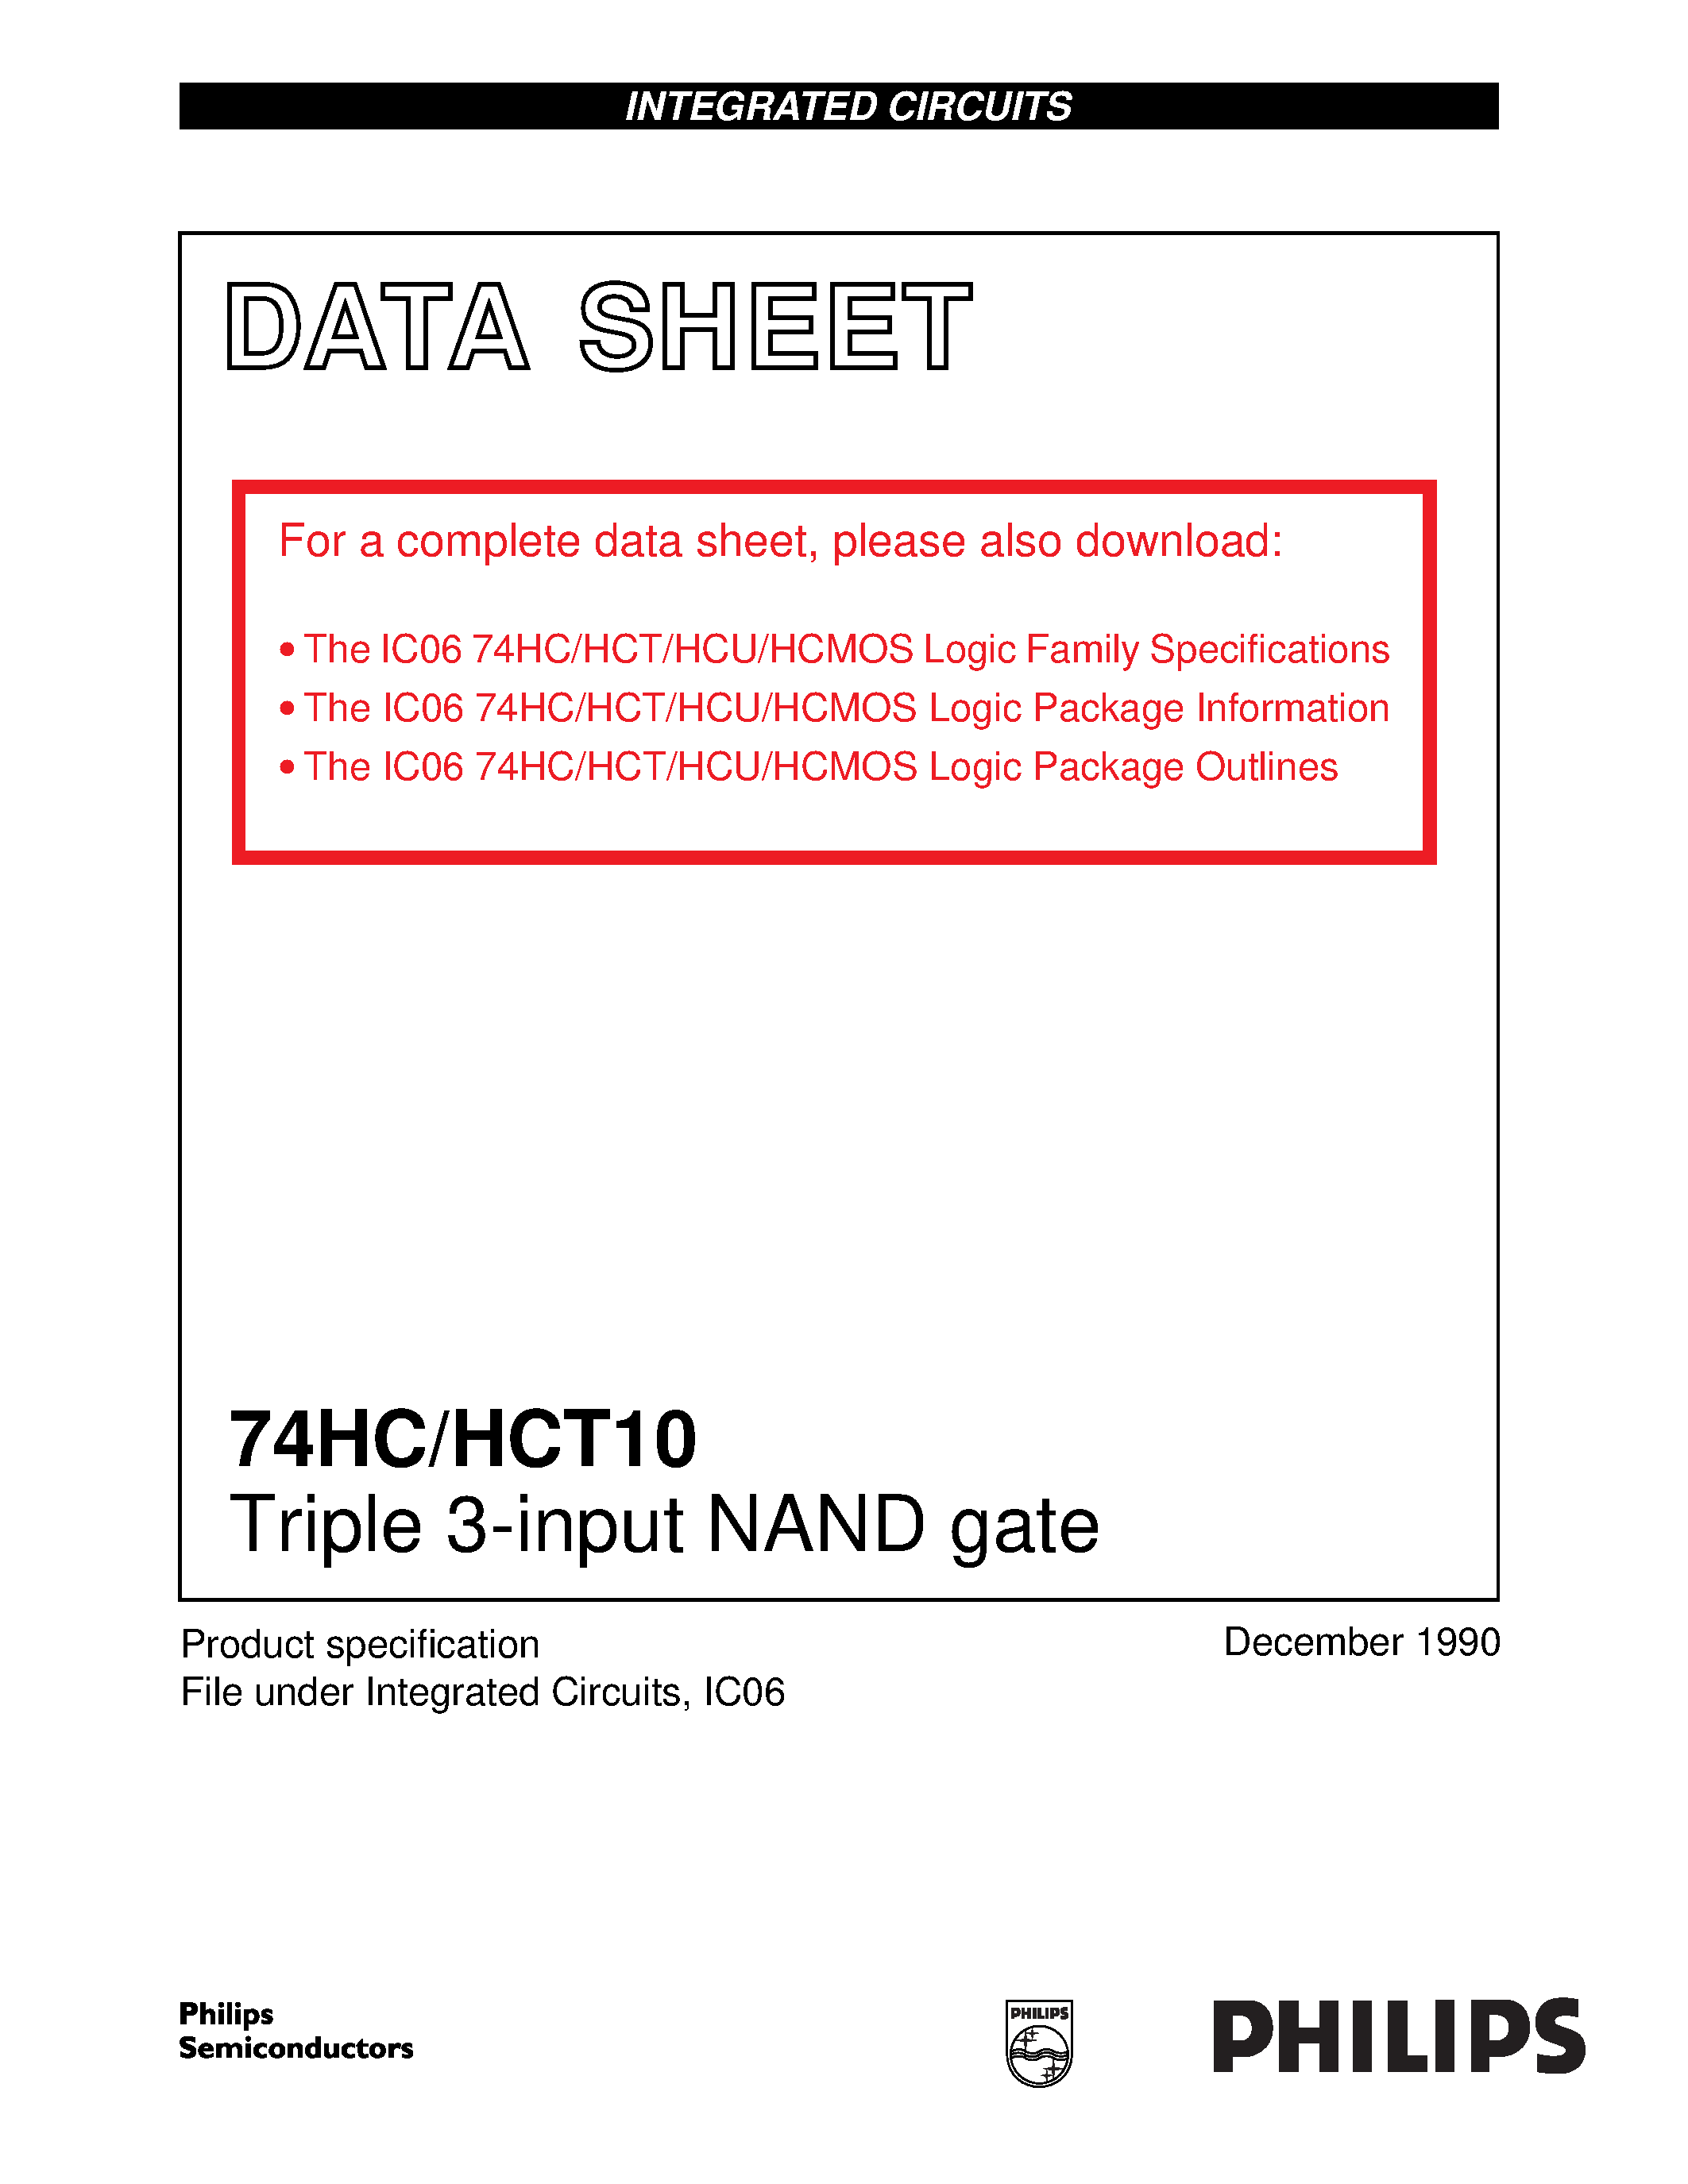 Даташит 74HC10 - Triple 3-input NAND gate страница 1